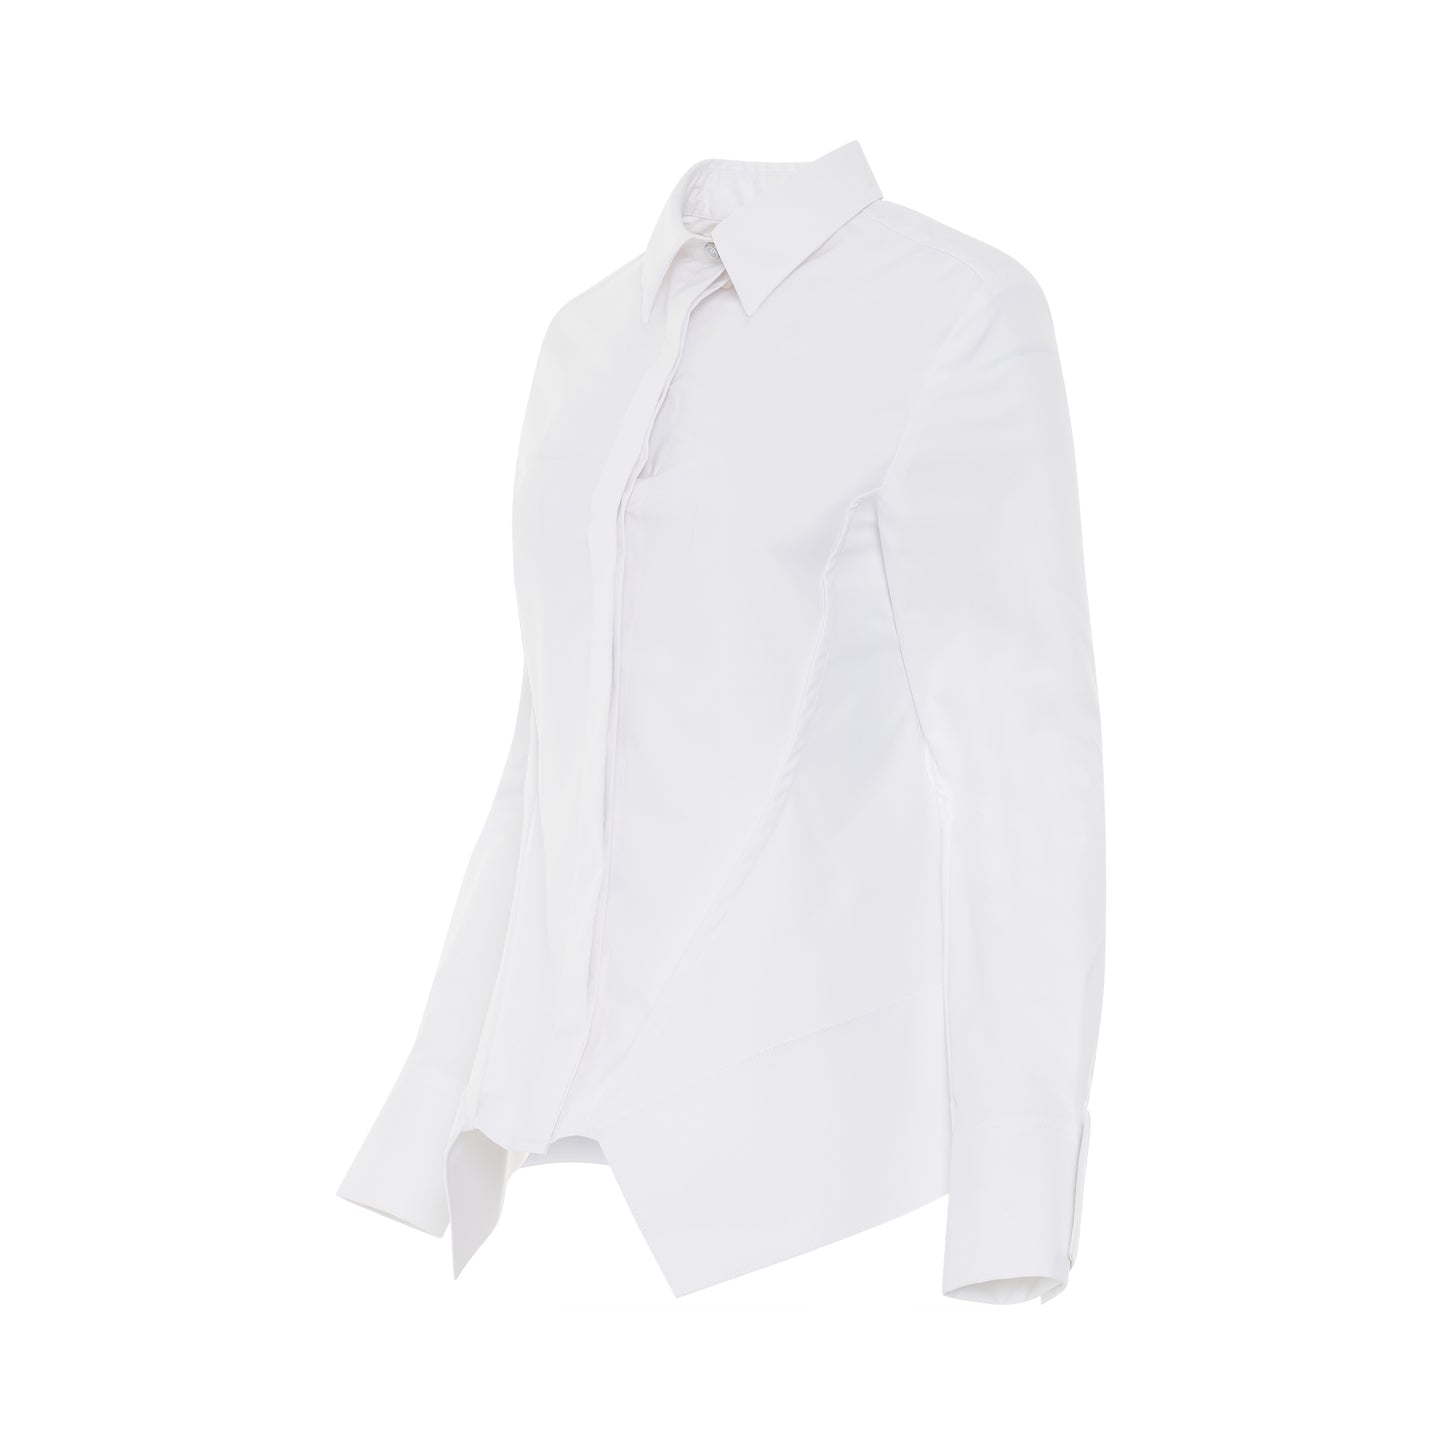 Peplum Long Sleeve Shirt in White